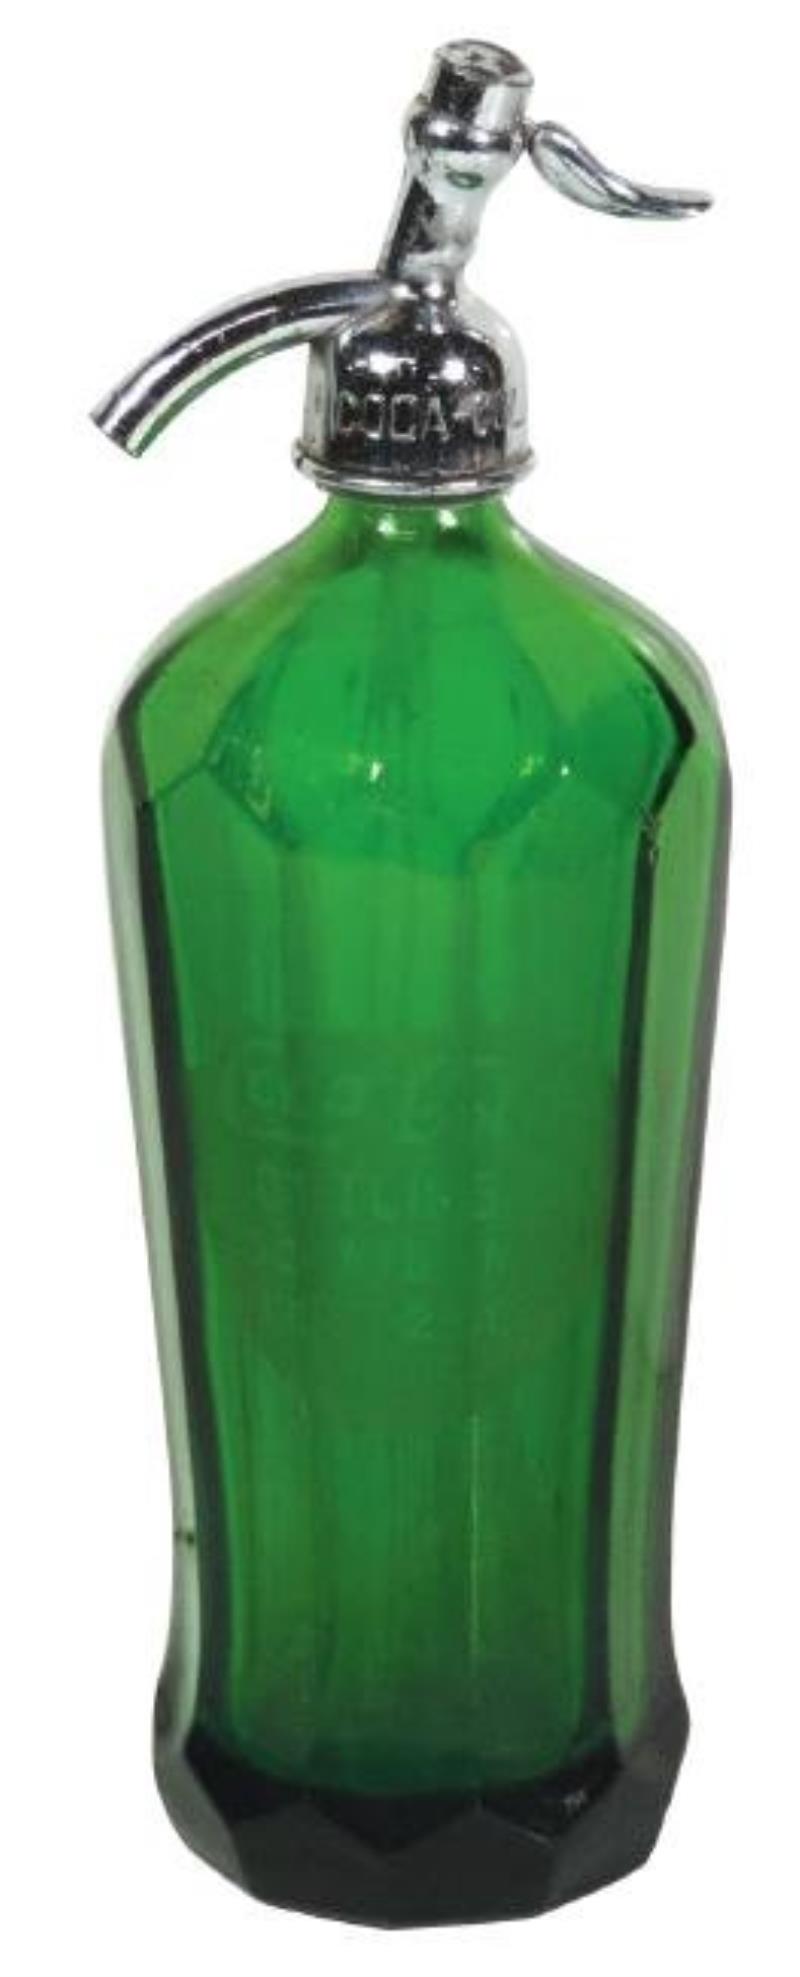 Coca-Cola seltzer bottle, emerald green glass, acid